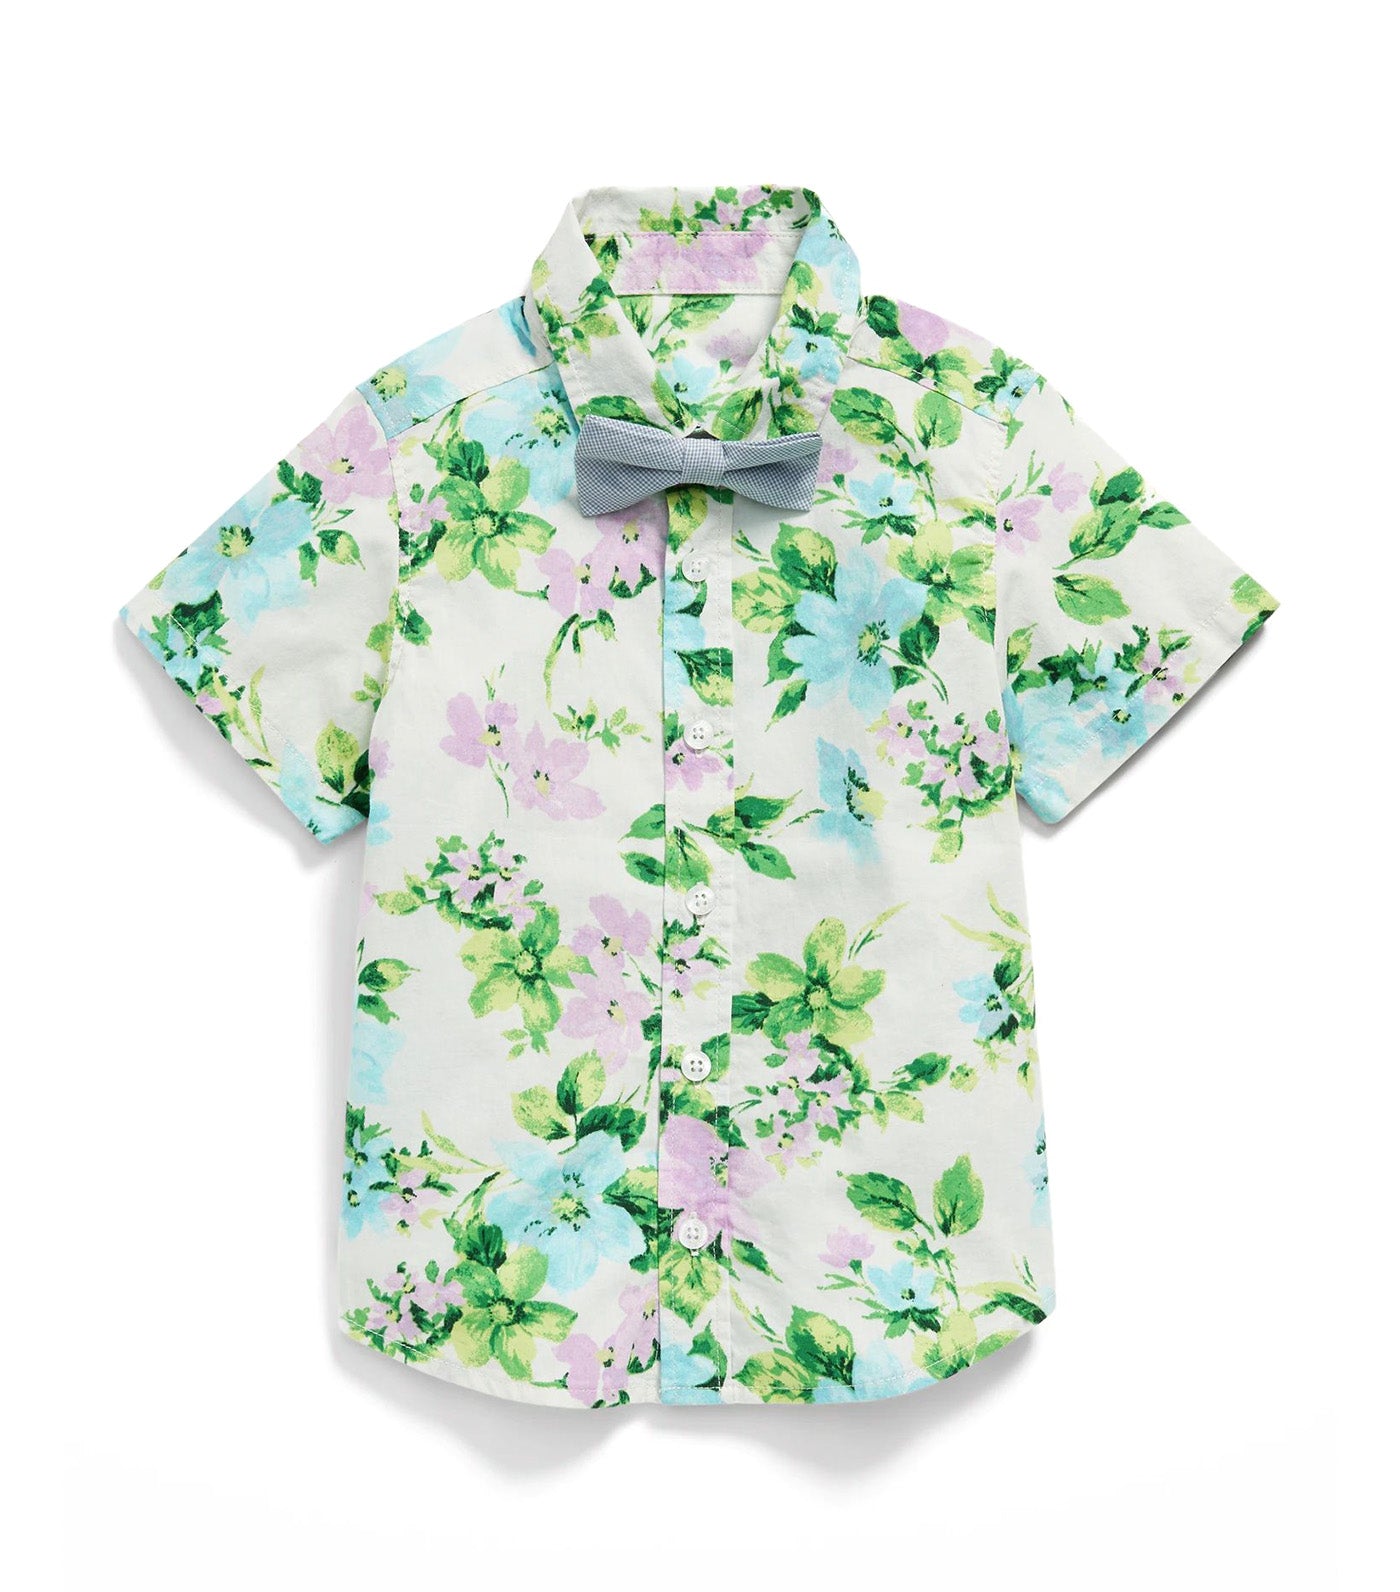 Printed Poplin Shirt & Bow-Tie Set for Toddler Boys - Multi-Floral